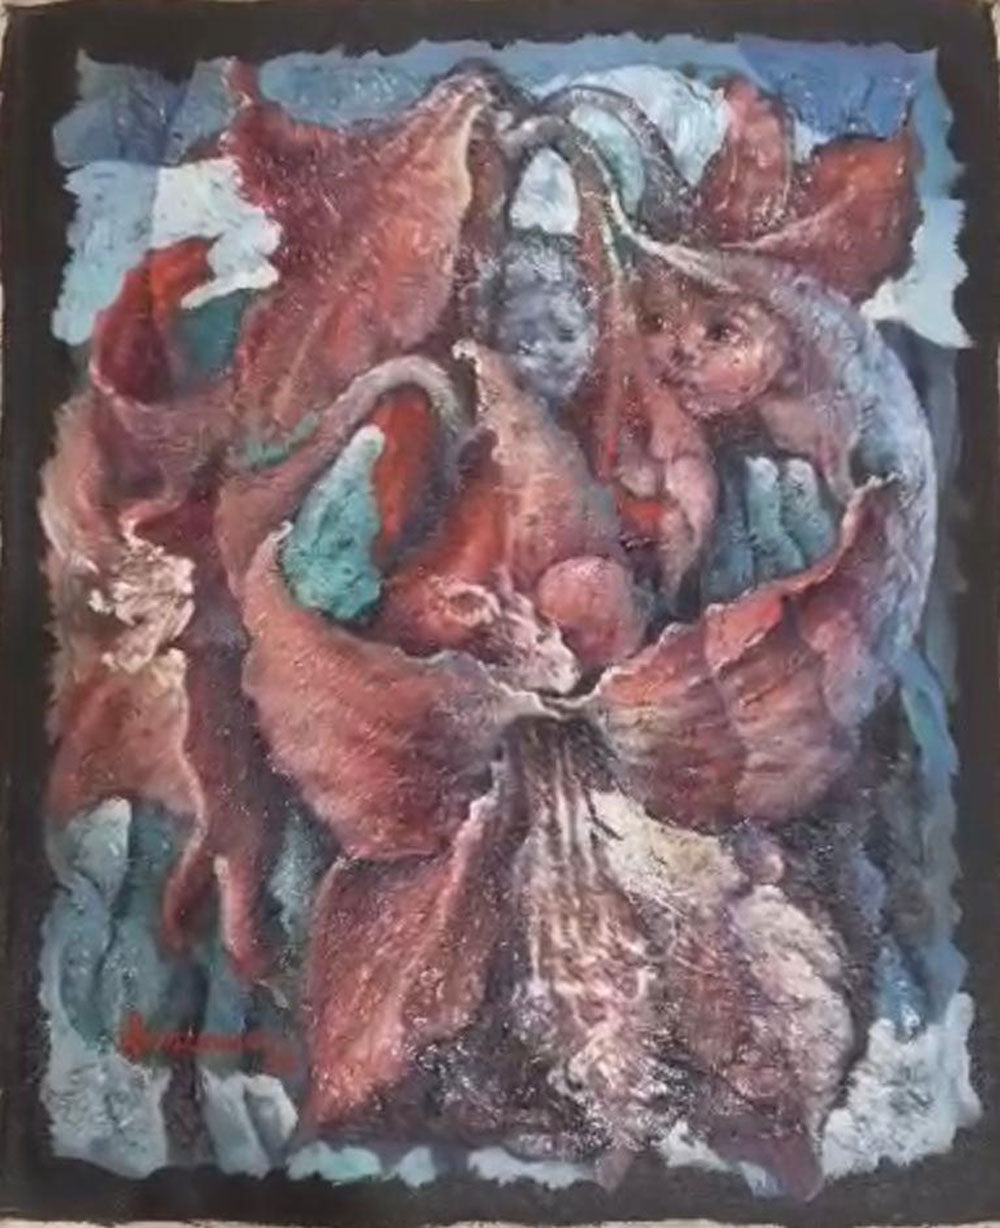 Lyonel Laurenceau (Haitian, b. 1942) "Apparition" 20"x16" 1996 Unframed Acrylic on Canvas Painting #14-3-96GSN-NY